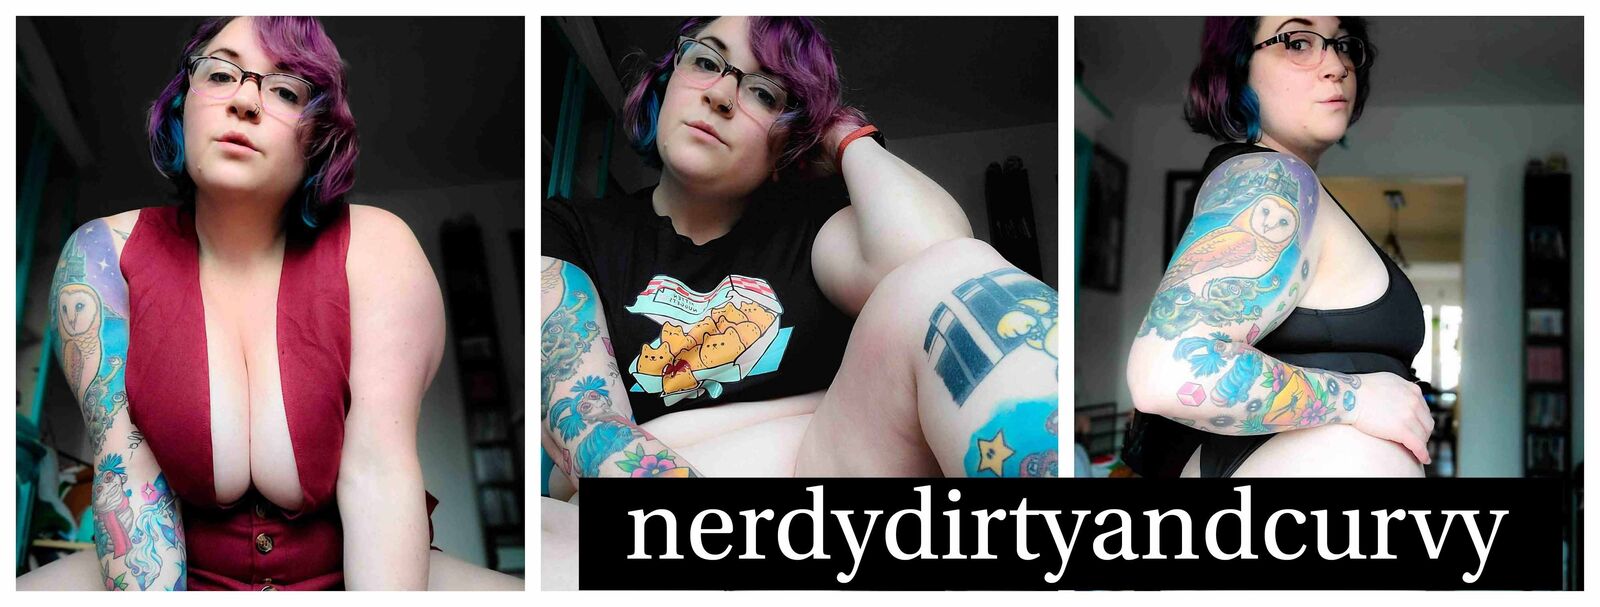 See Nerdydirtyandcurvy profile